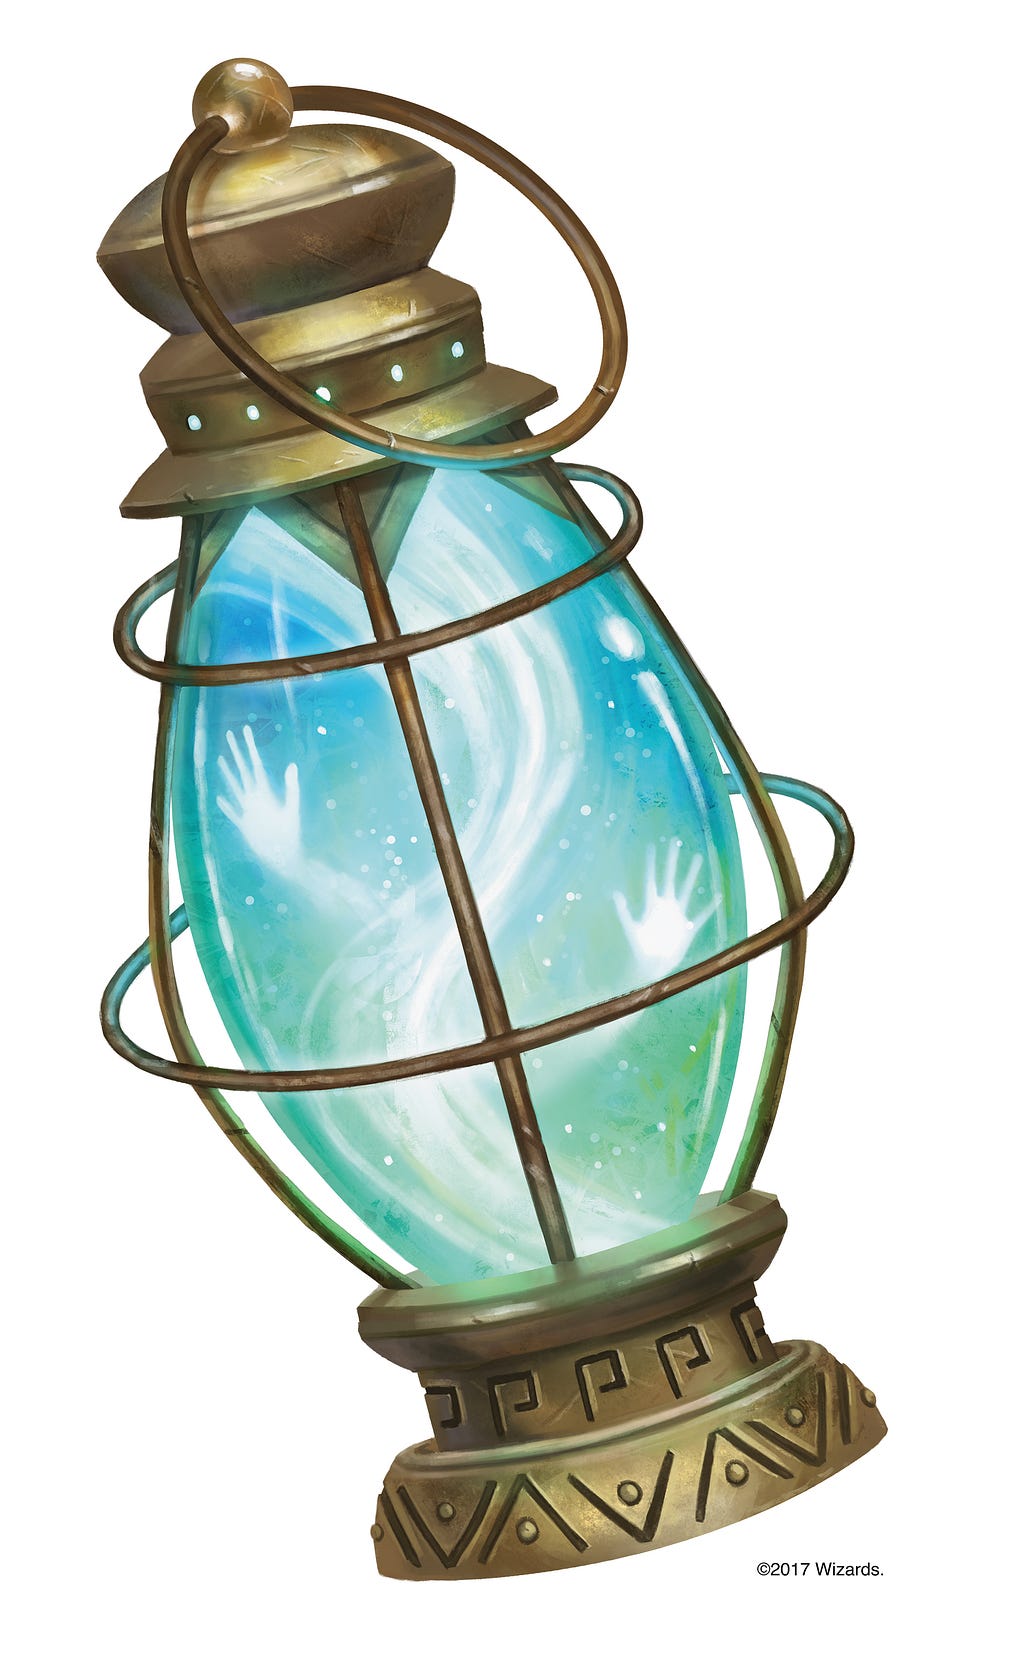 A golden lantern with a spirit inside of it.